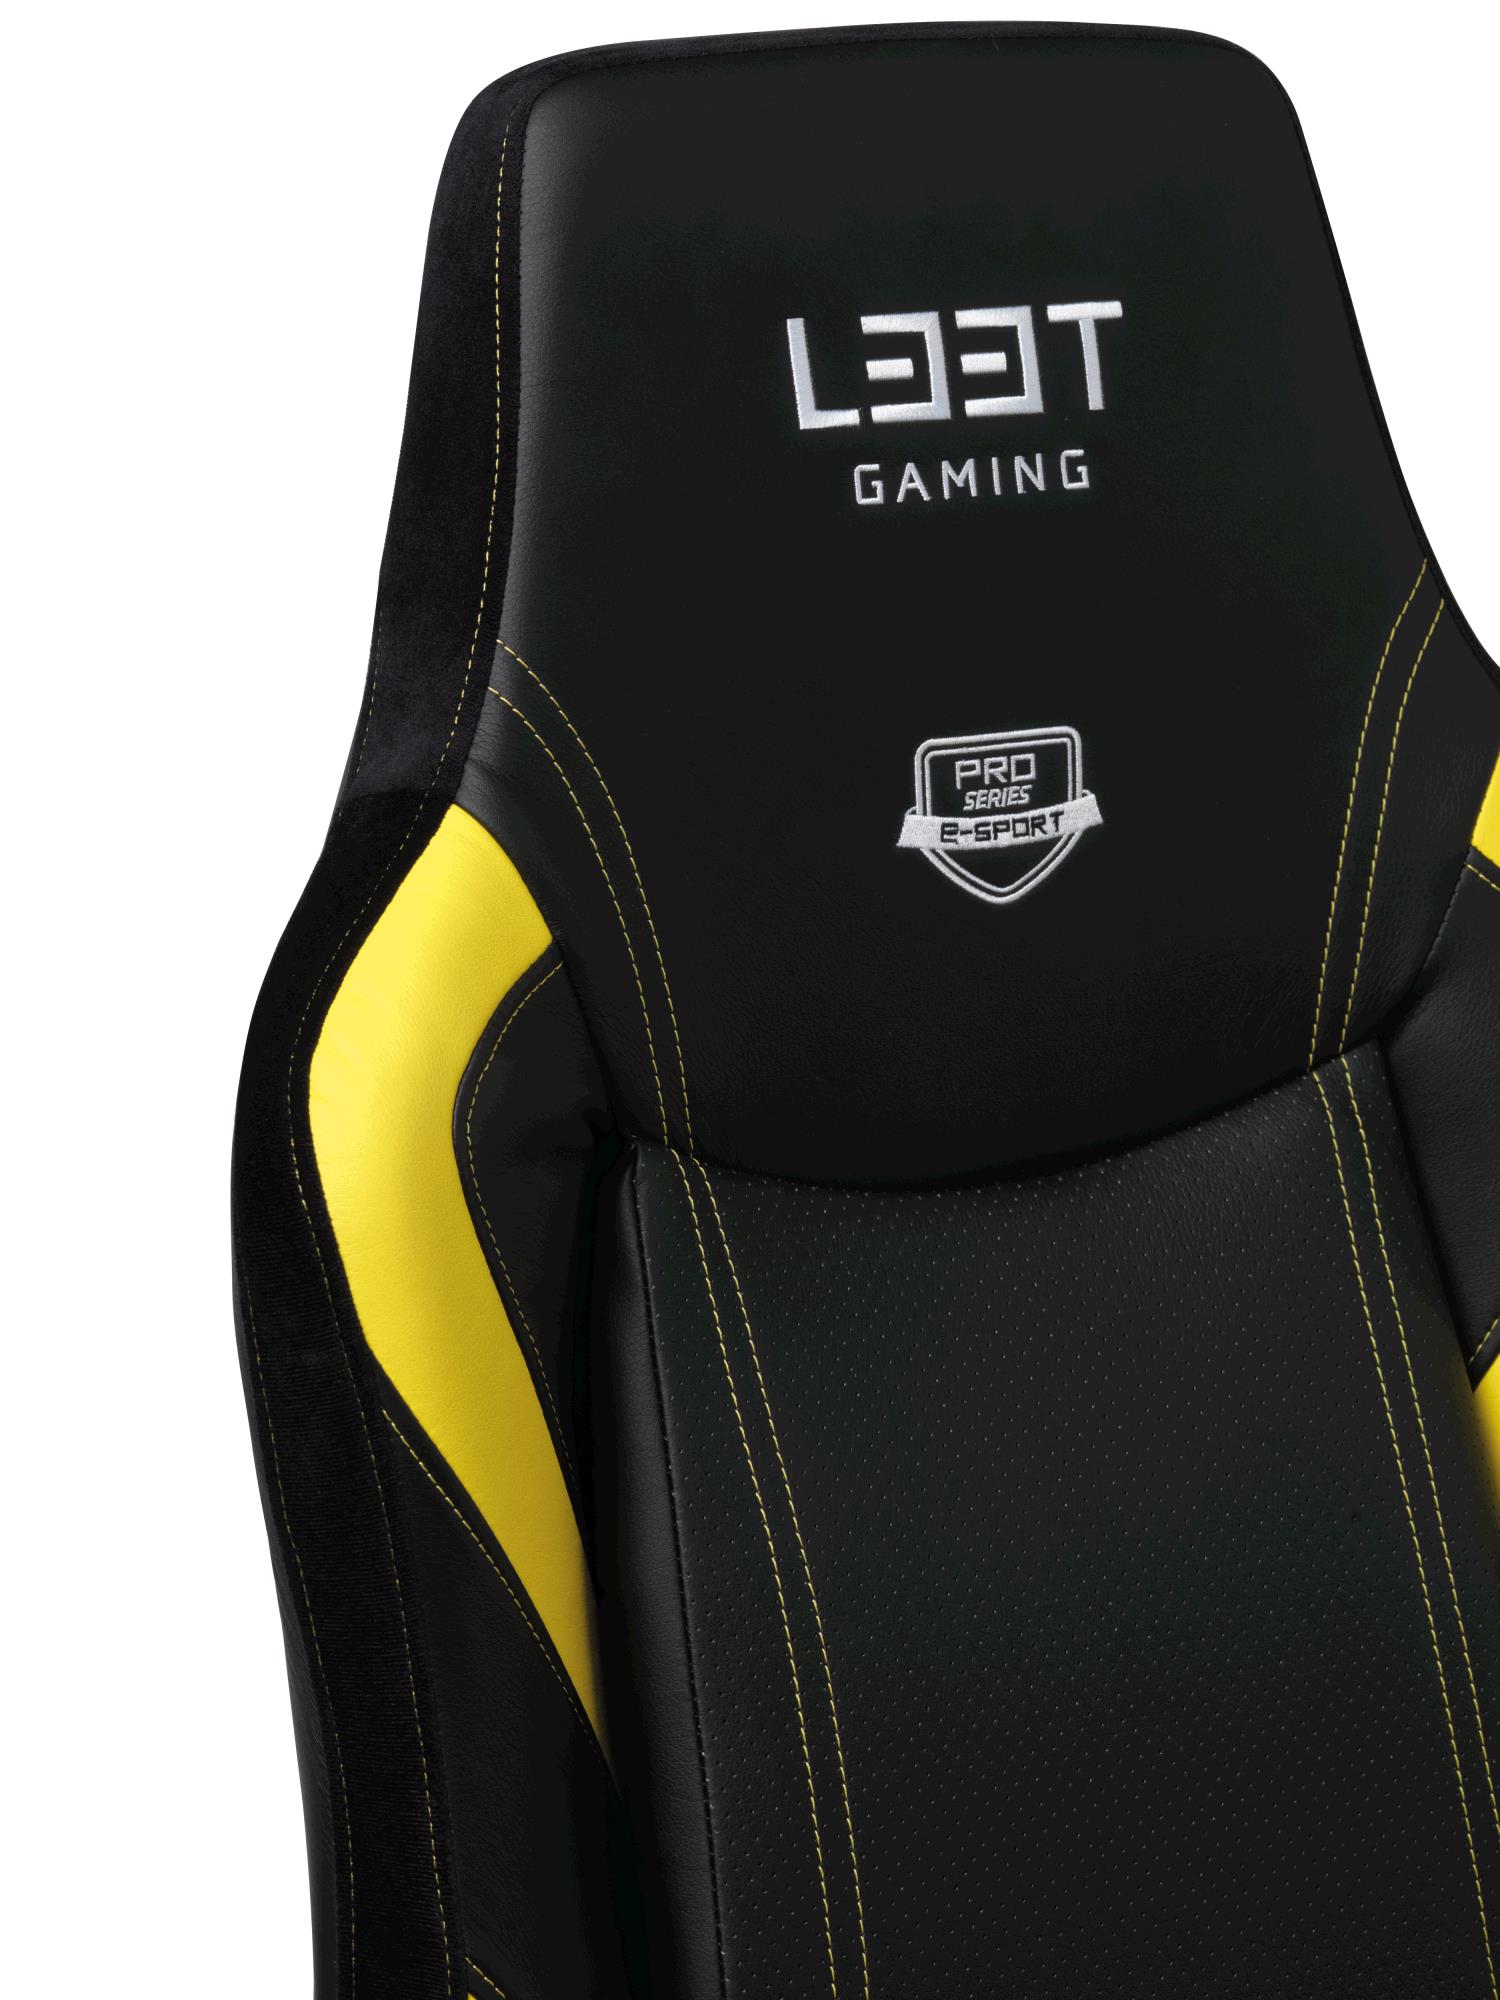 L33T Gaming E-Sport Pro Excellence L